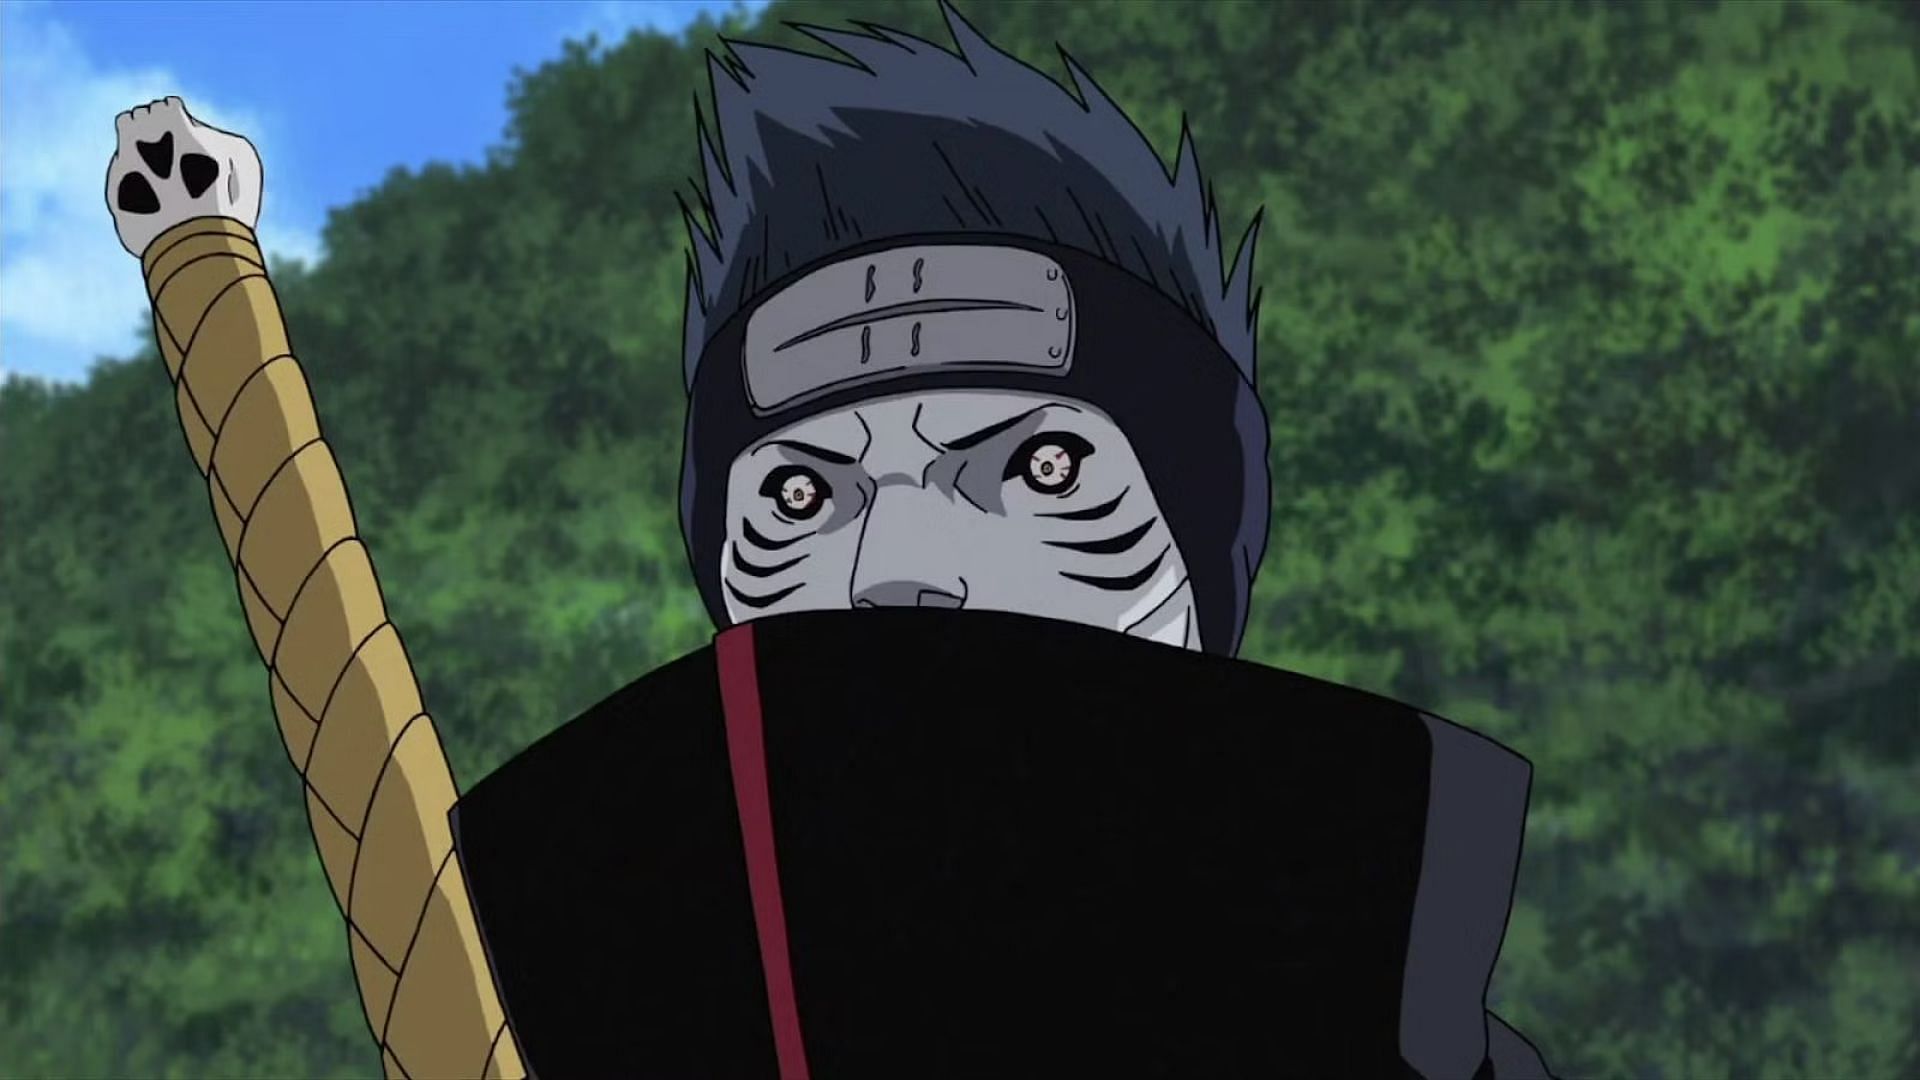 Kisame Hoshigaki is a powerful shinobi among other Naruto villains (Image via Studio Pierrot)